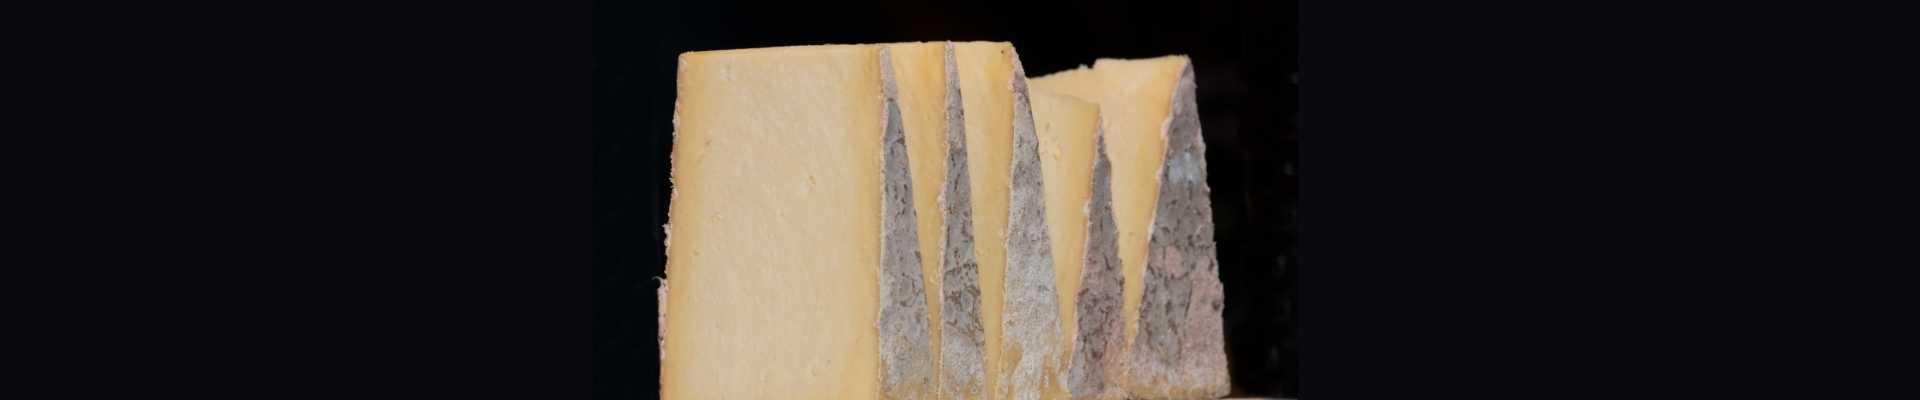 A la coupe - Individual cheese